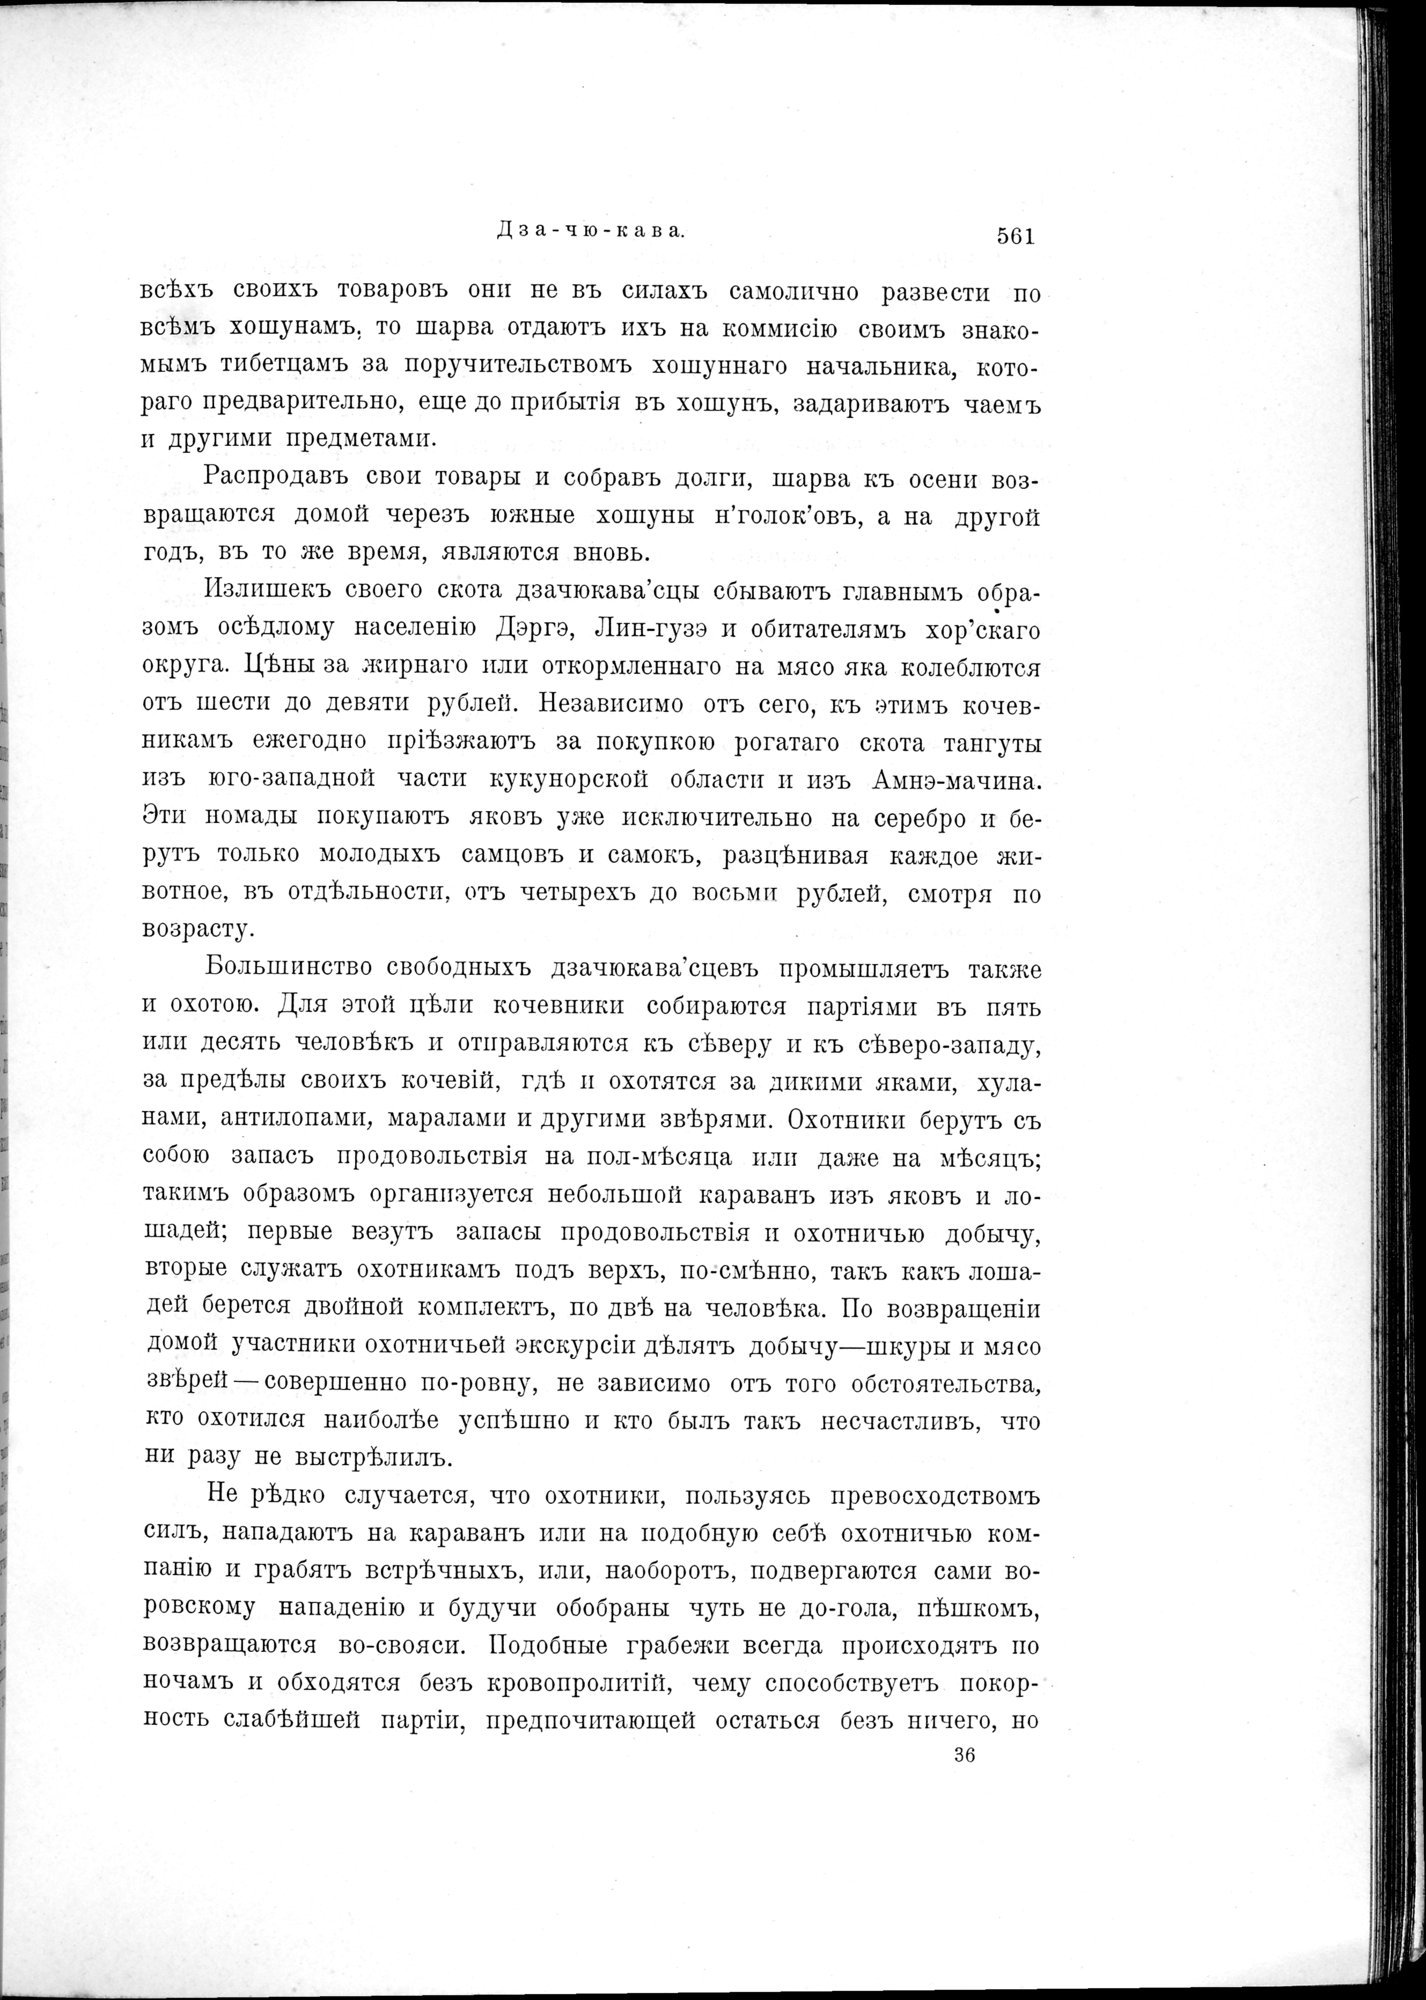 Mongoliia i Kam : vol.2 / Page 385 (Grayscale High Resolution Image)